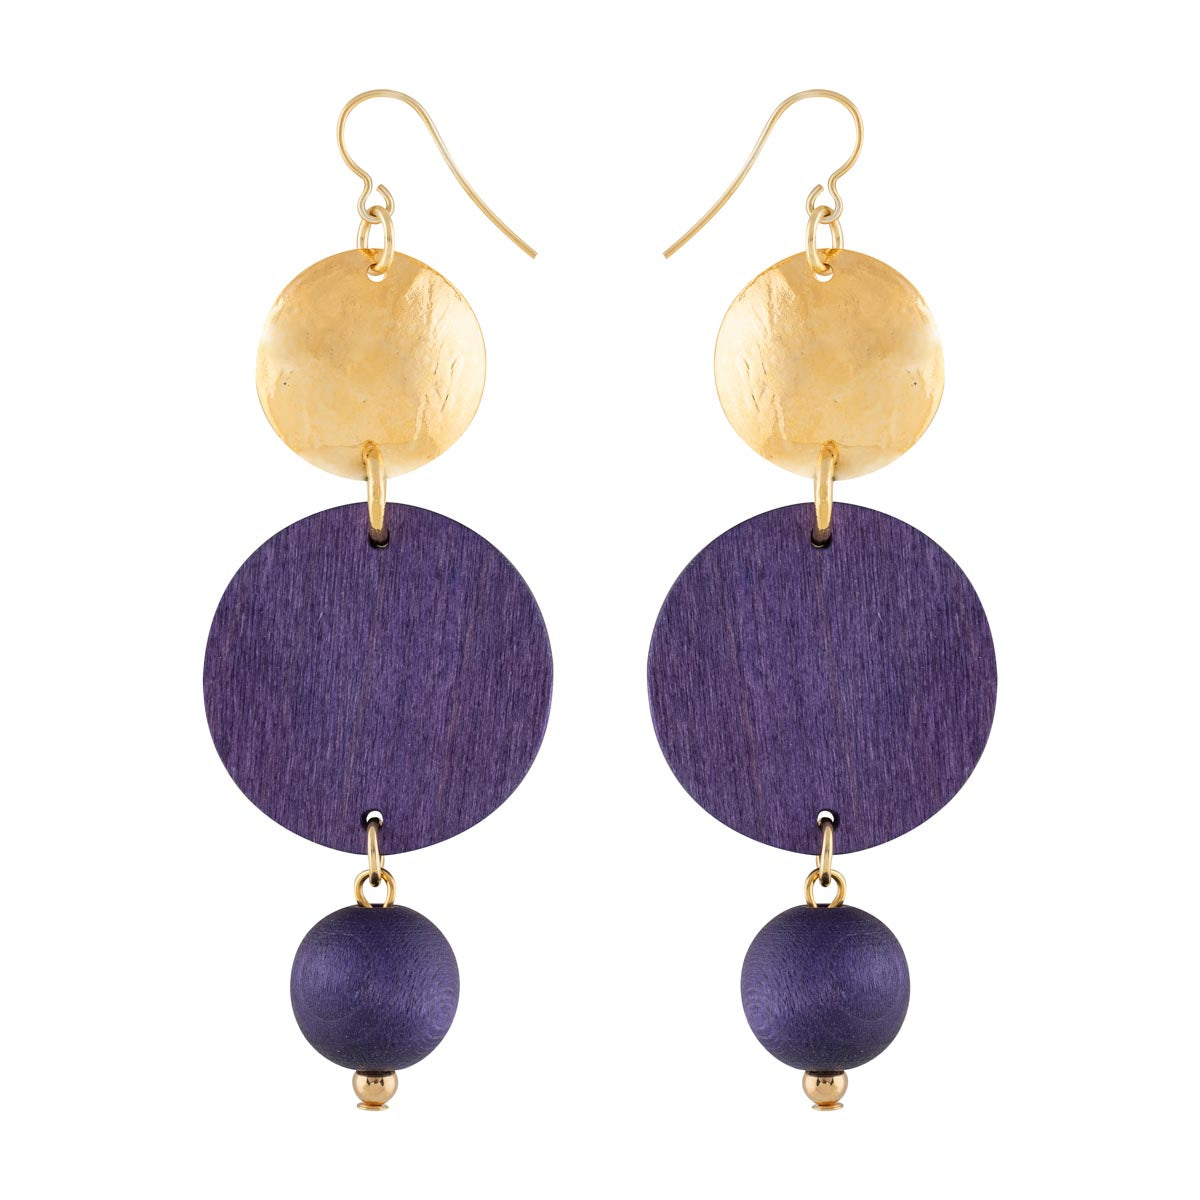 Ilta earrings, purple and gold